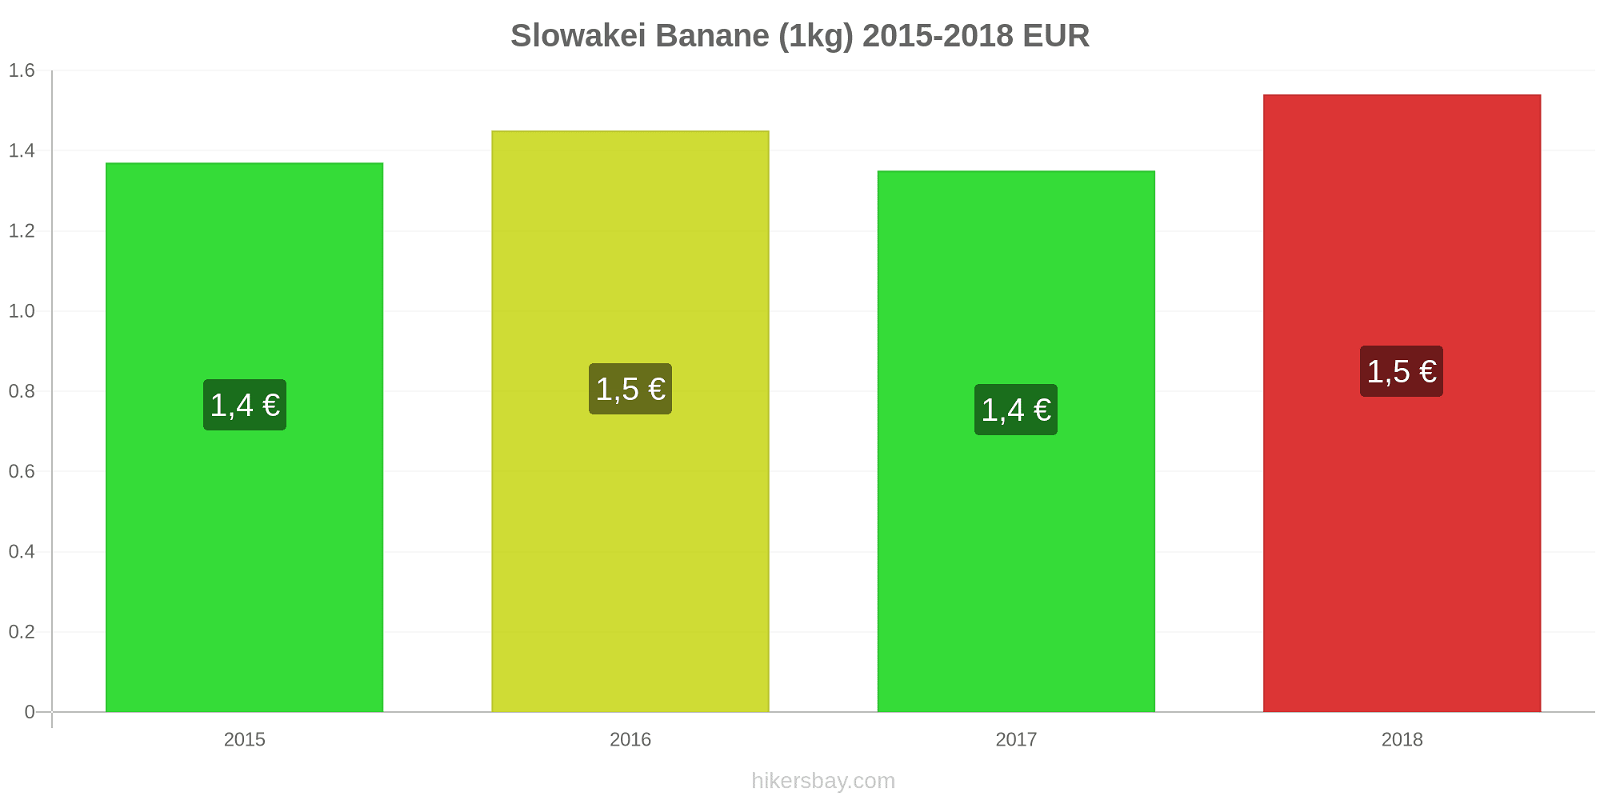 Slowakei Preisänderungen Bananen (1kg) hikersbay.com